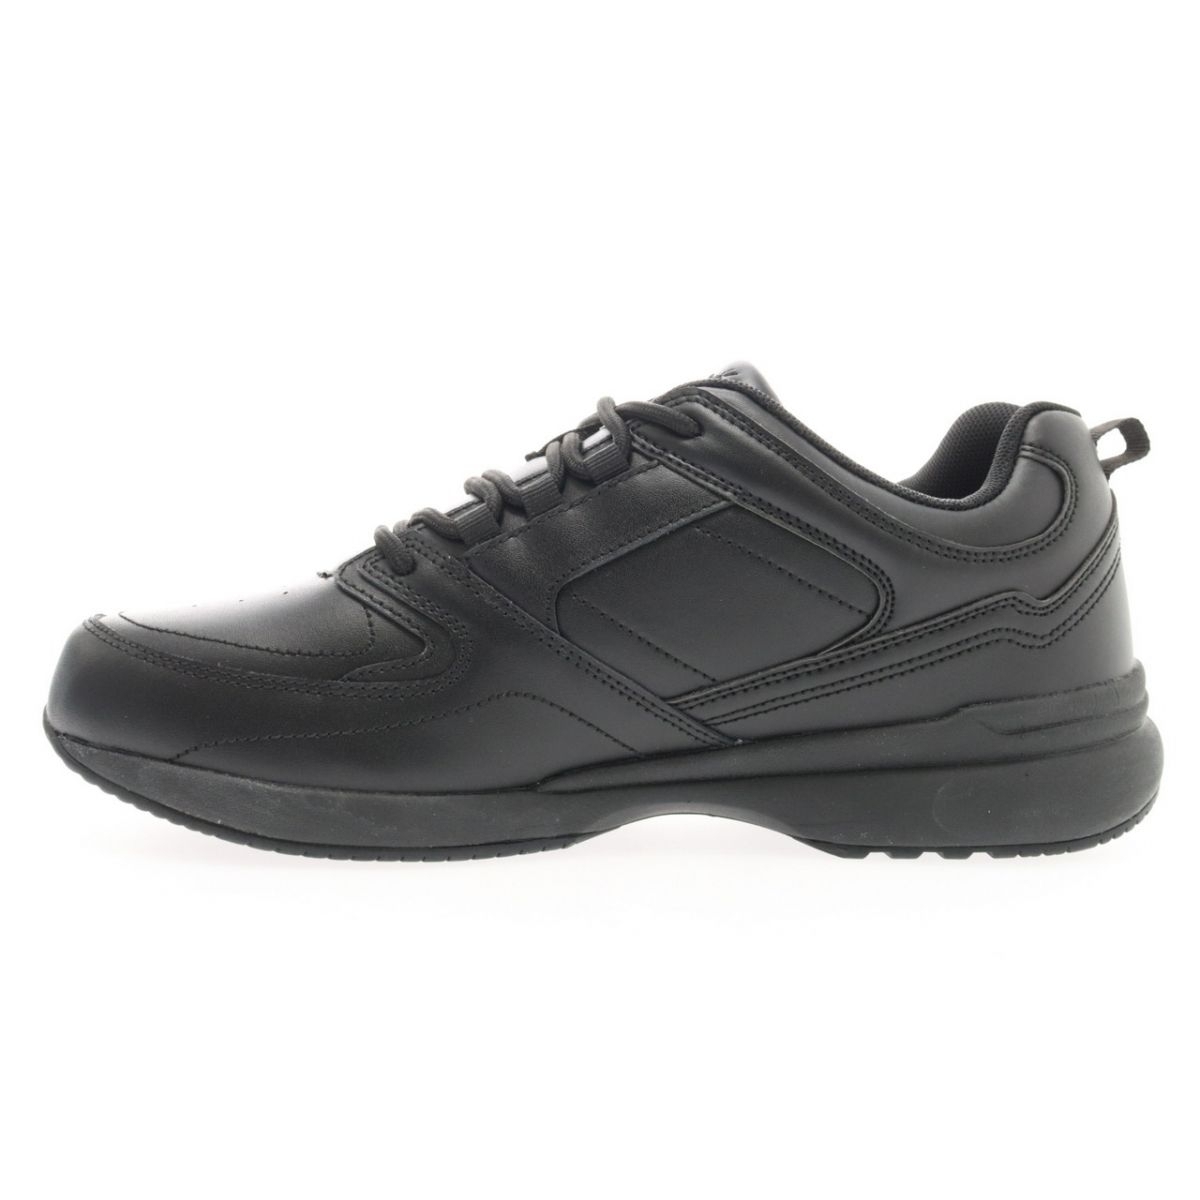 Propet Men's Life Walker Sport Sneaker Black - MAA272LBLK BLACK - BLACK, 14